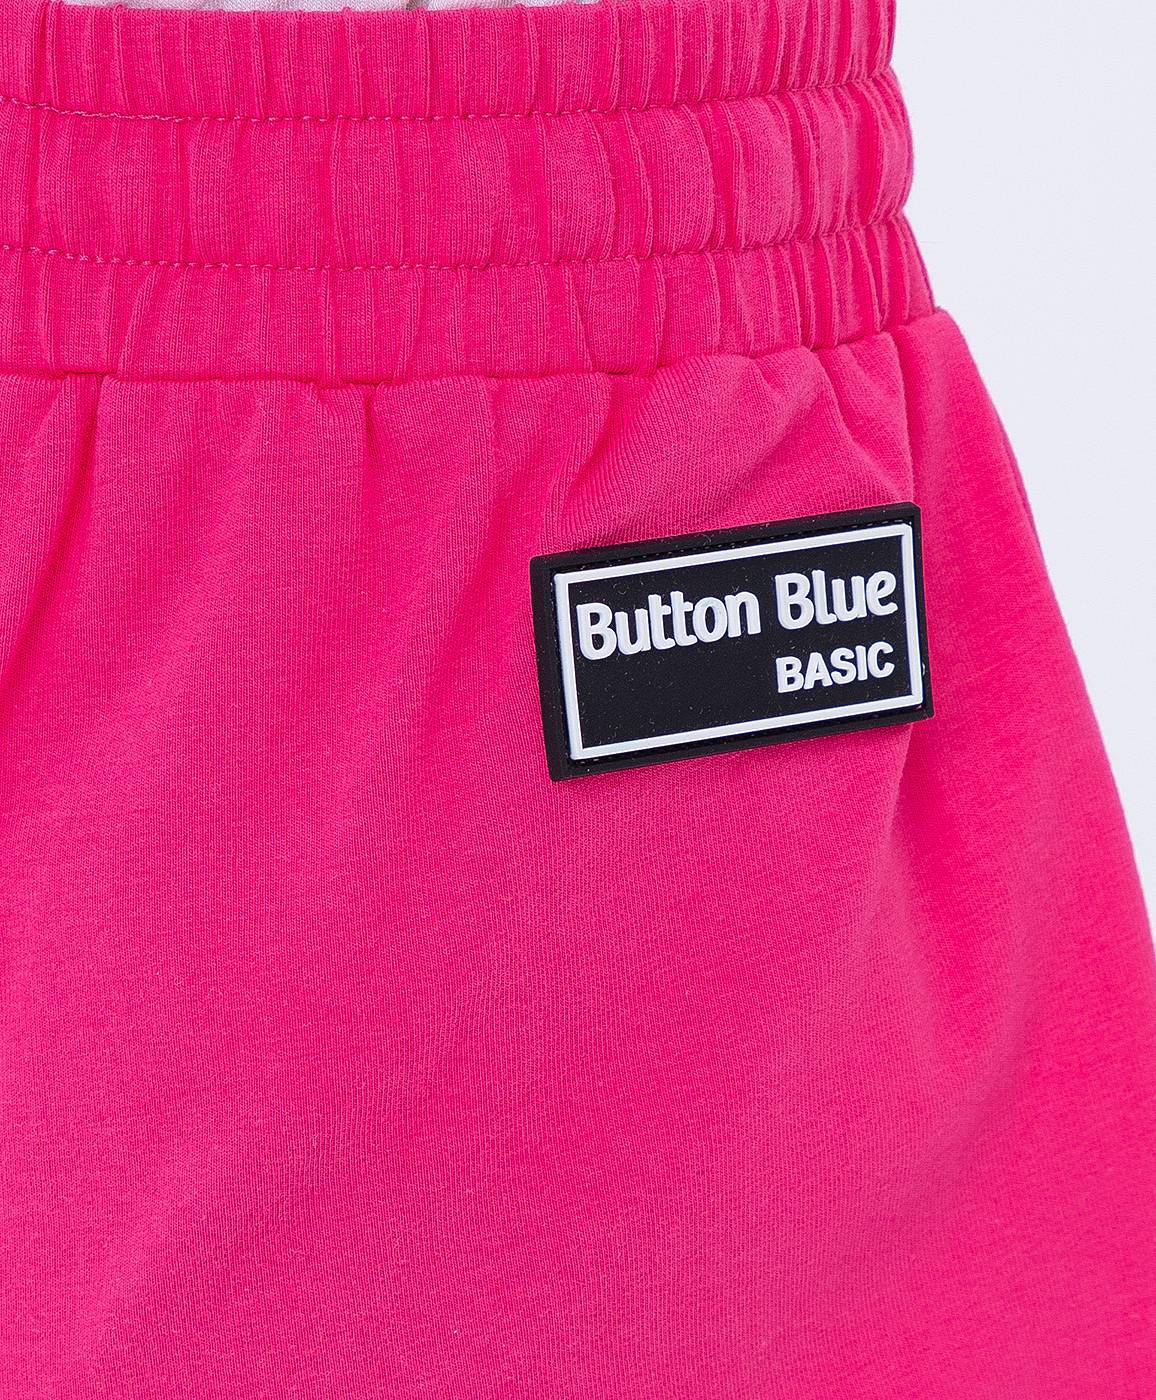 Шорты розовые Button Blue 122BBGB54013600, размер 116, цвет розовый - фото 4